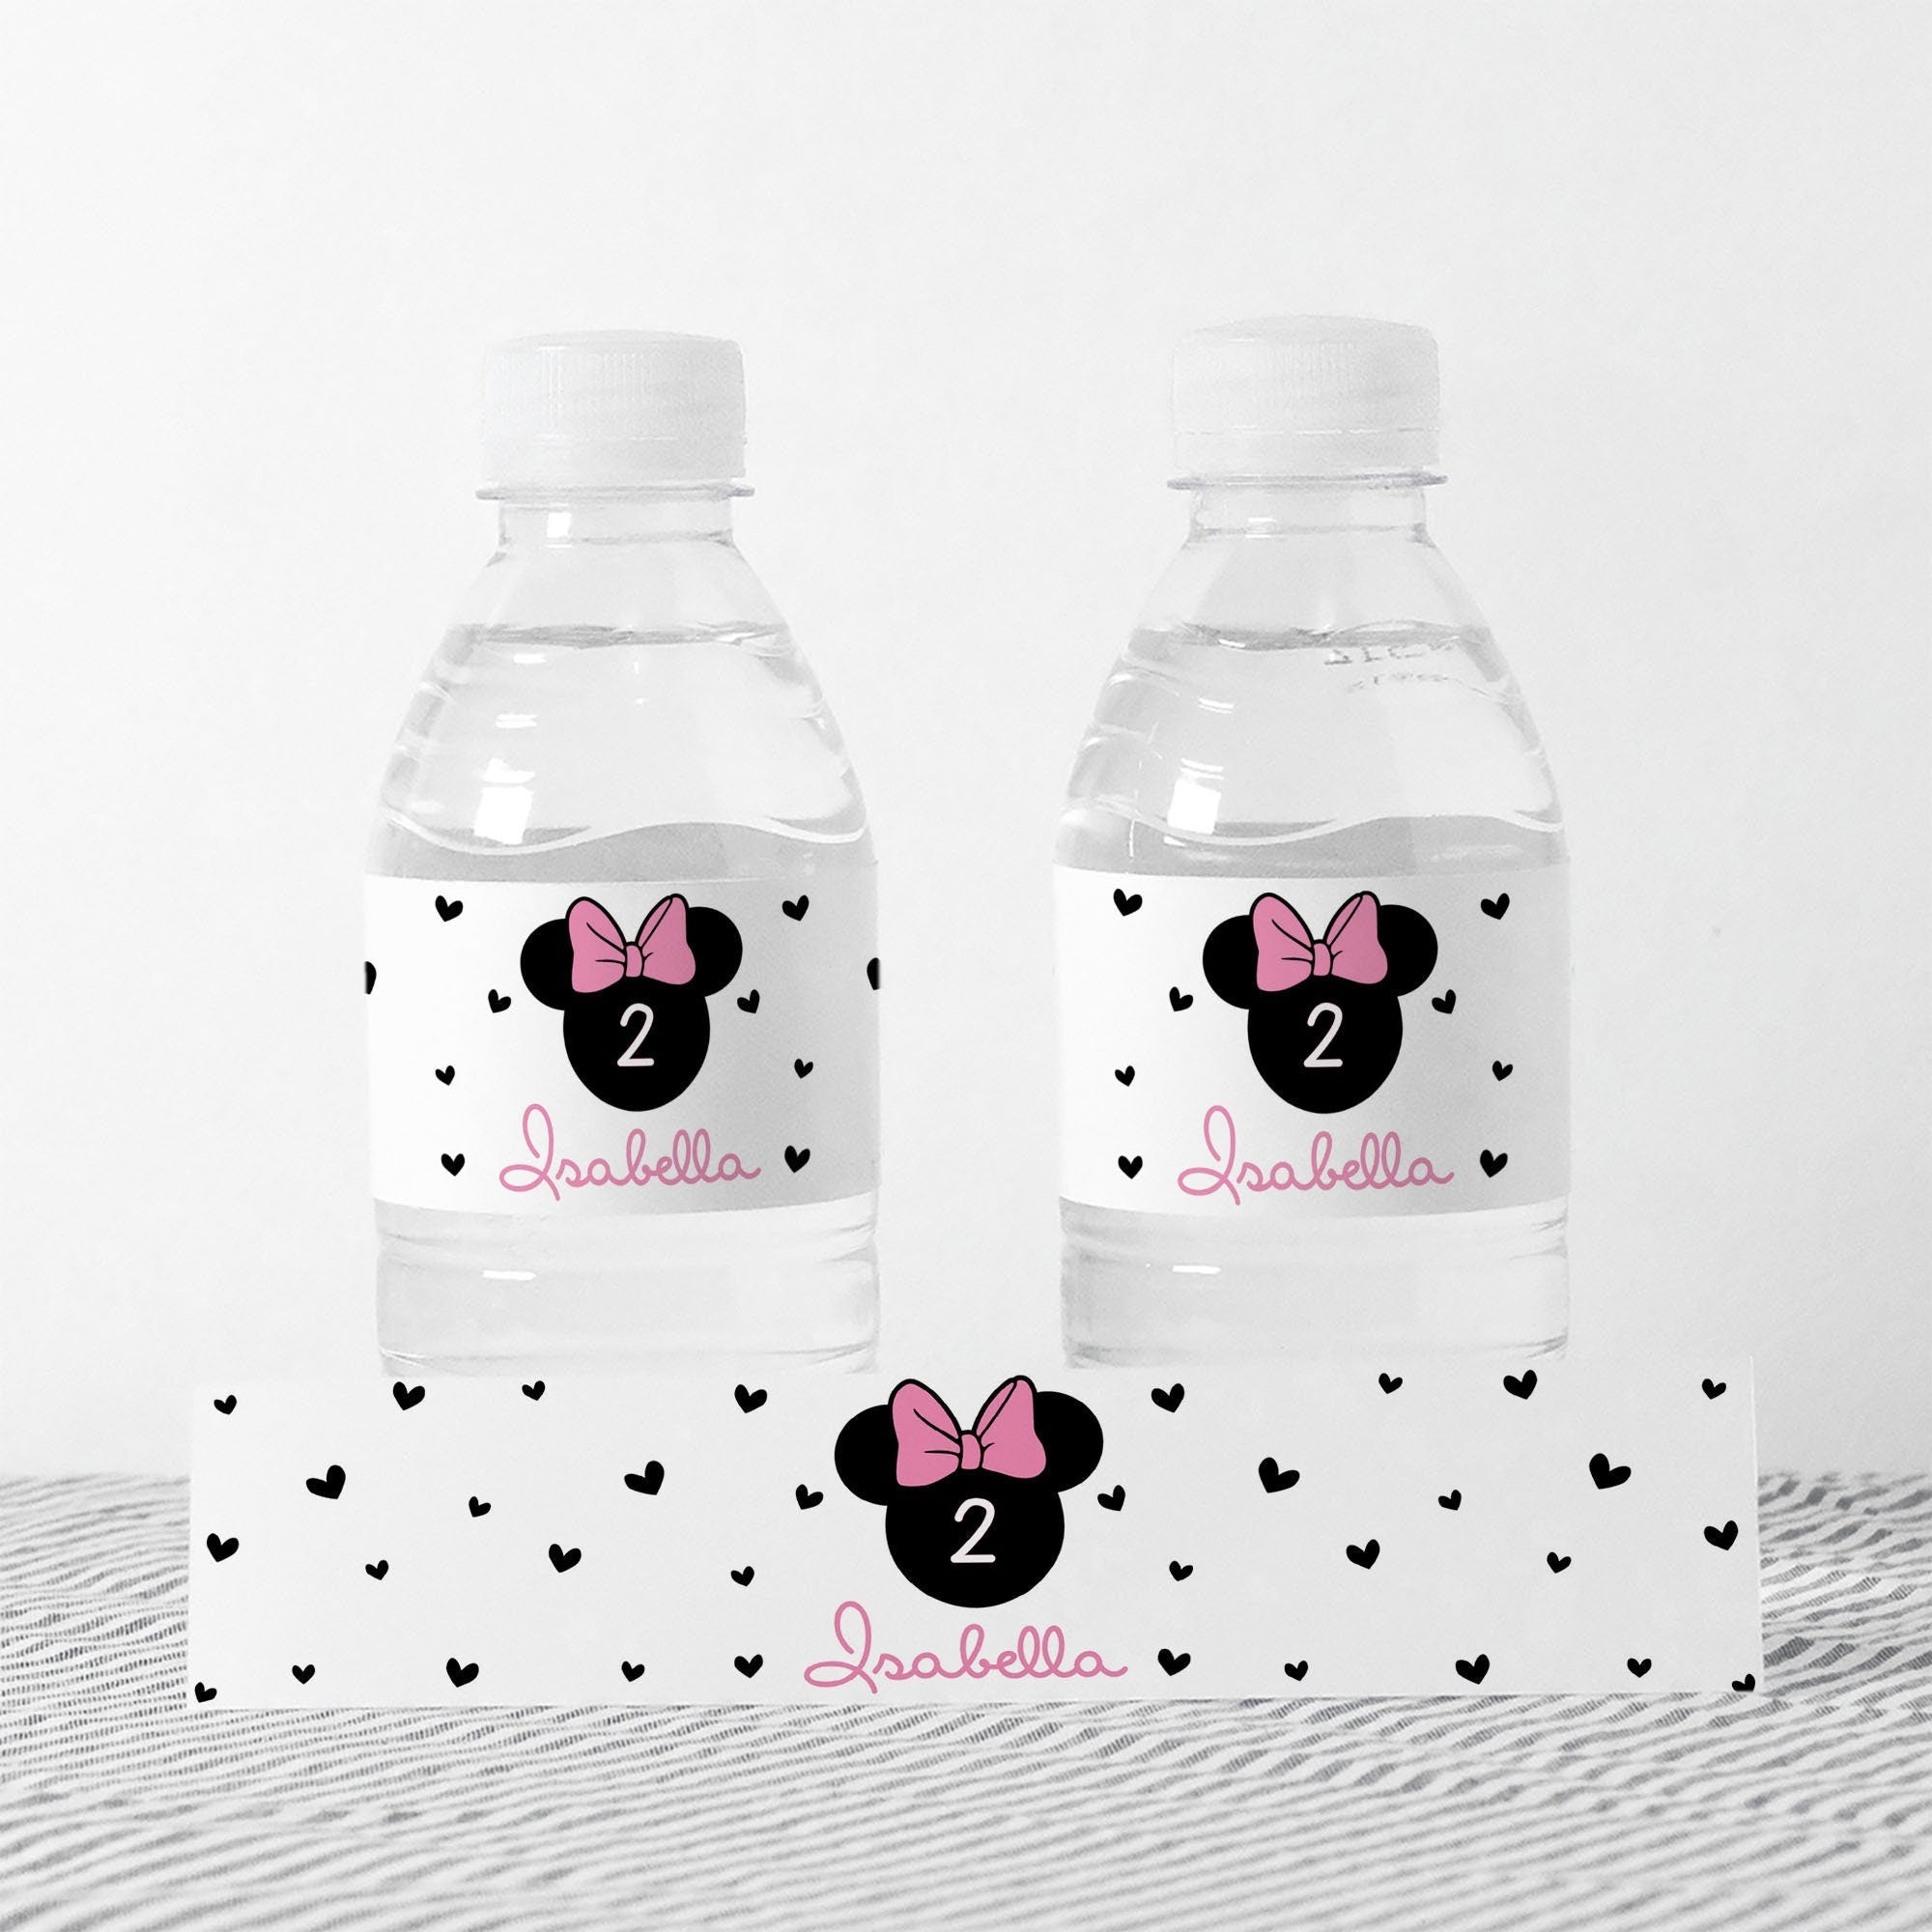 Minnie Mouse Bottle Labels ★ Instant Download | Editable Text